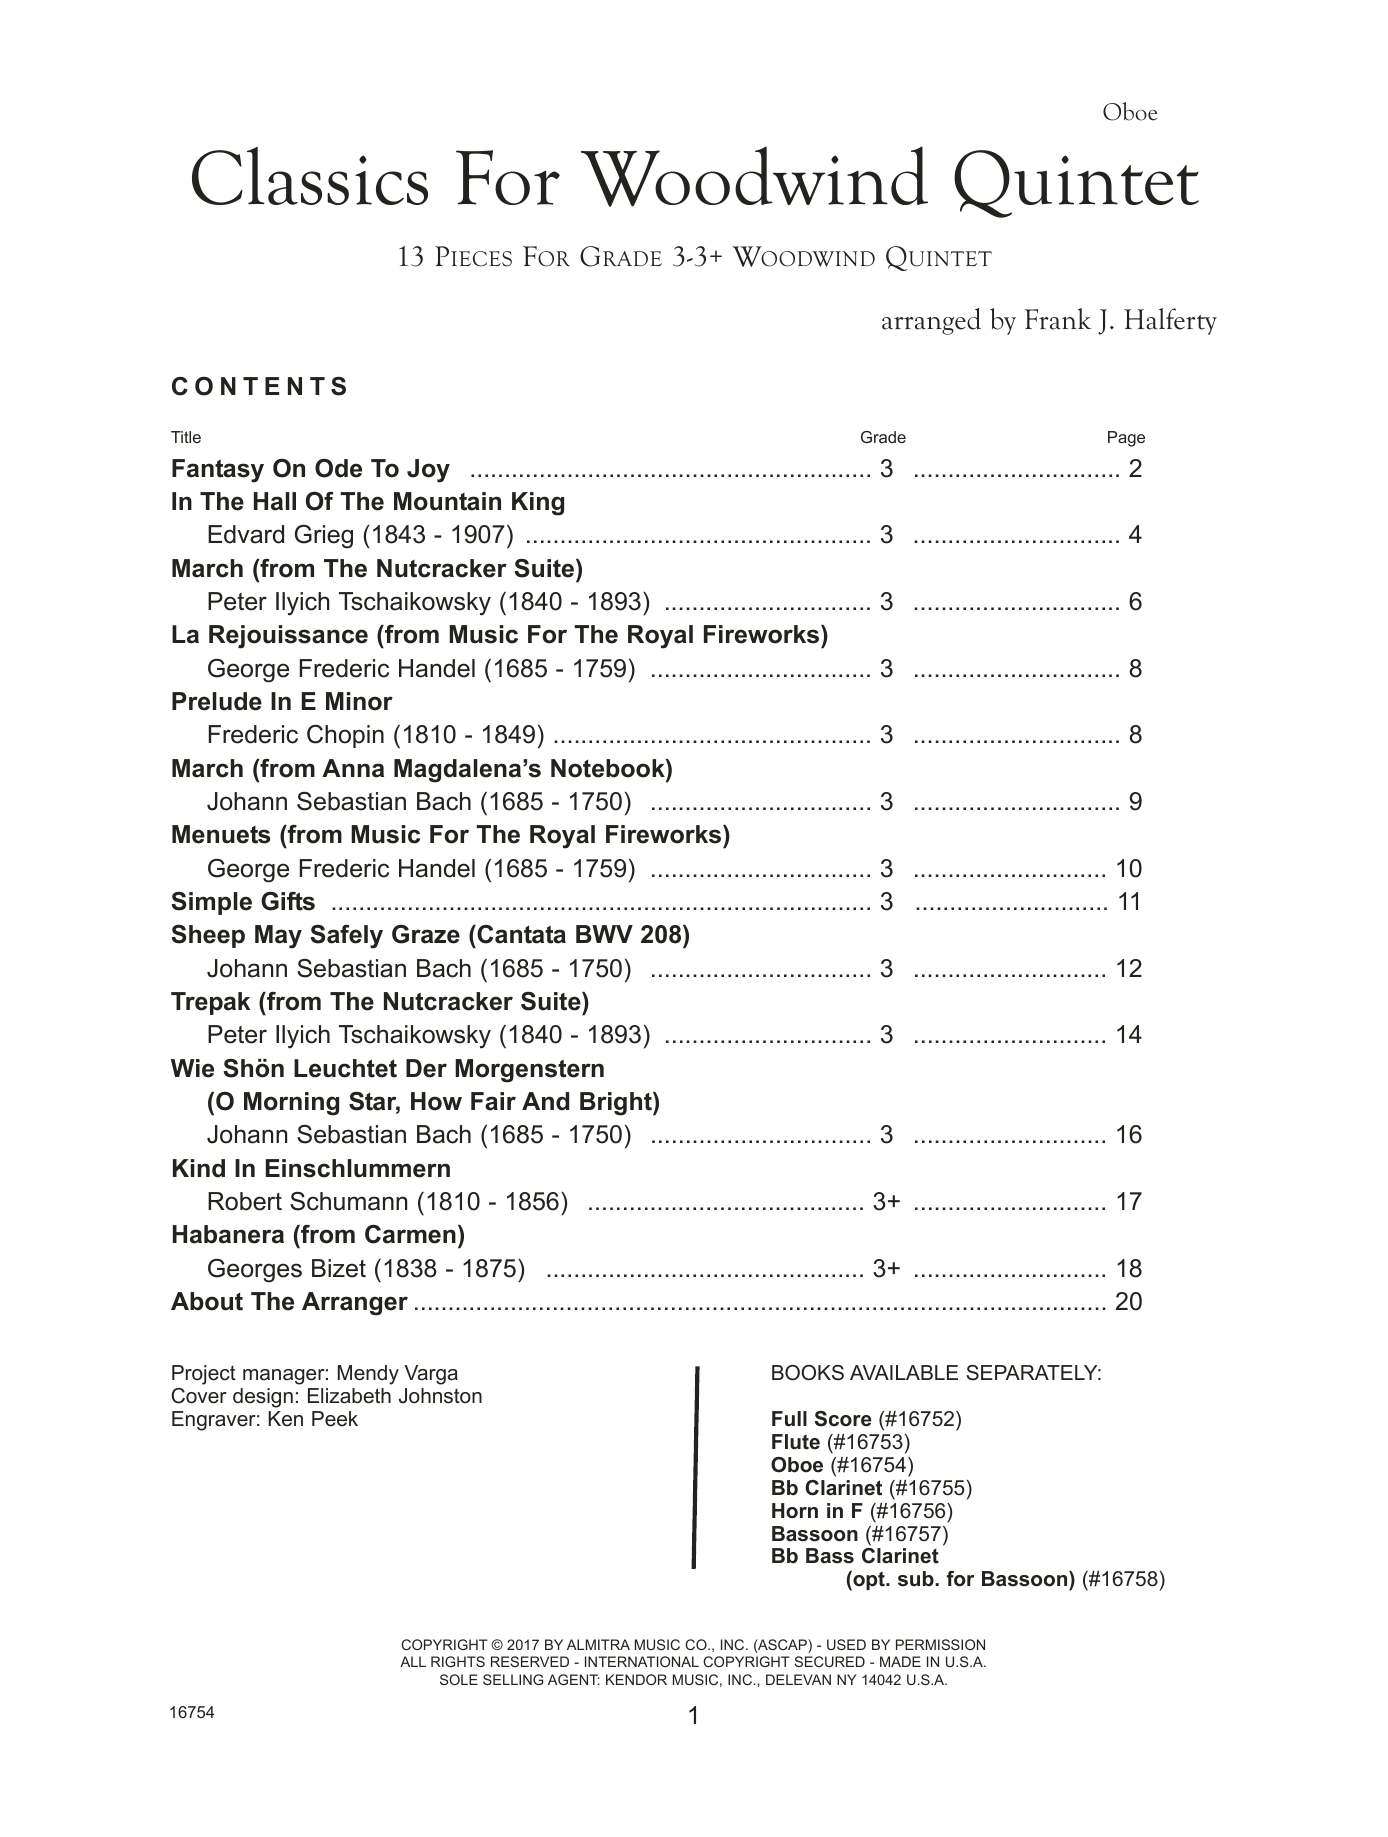 Download Frank J. Halferty Classics For Woodwind Quintet - Oboe Sheet Music